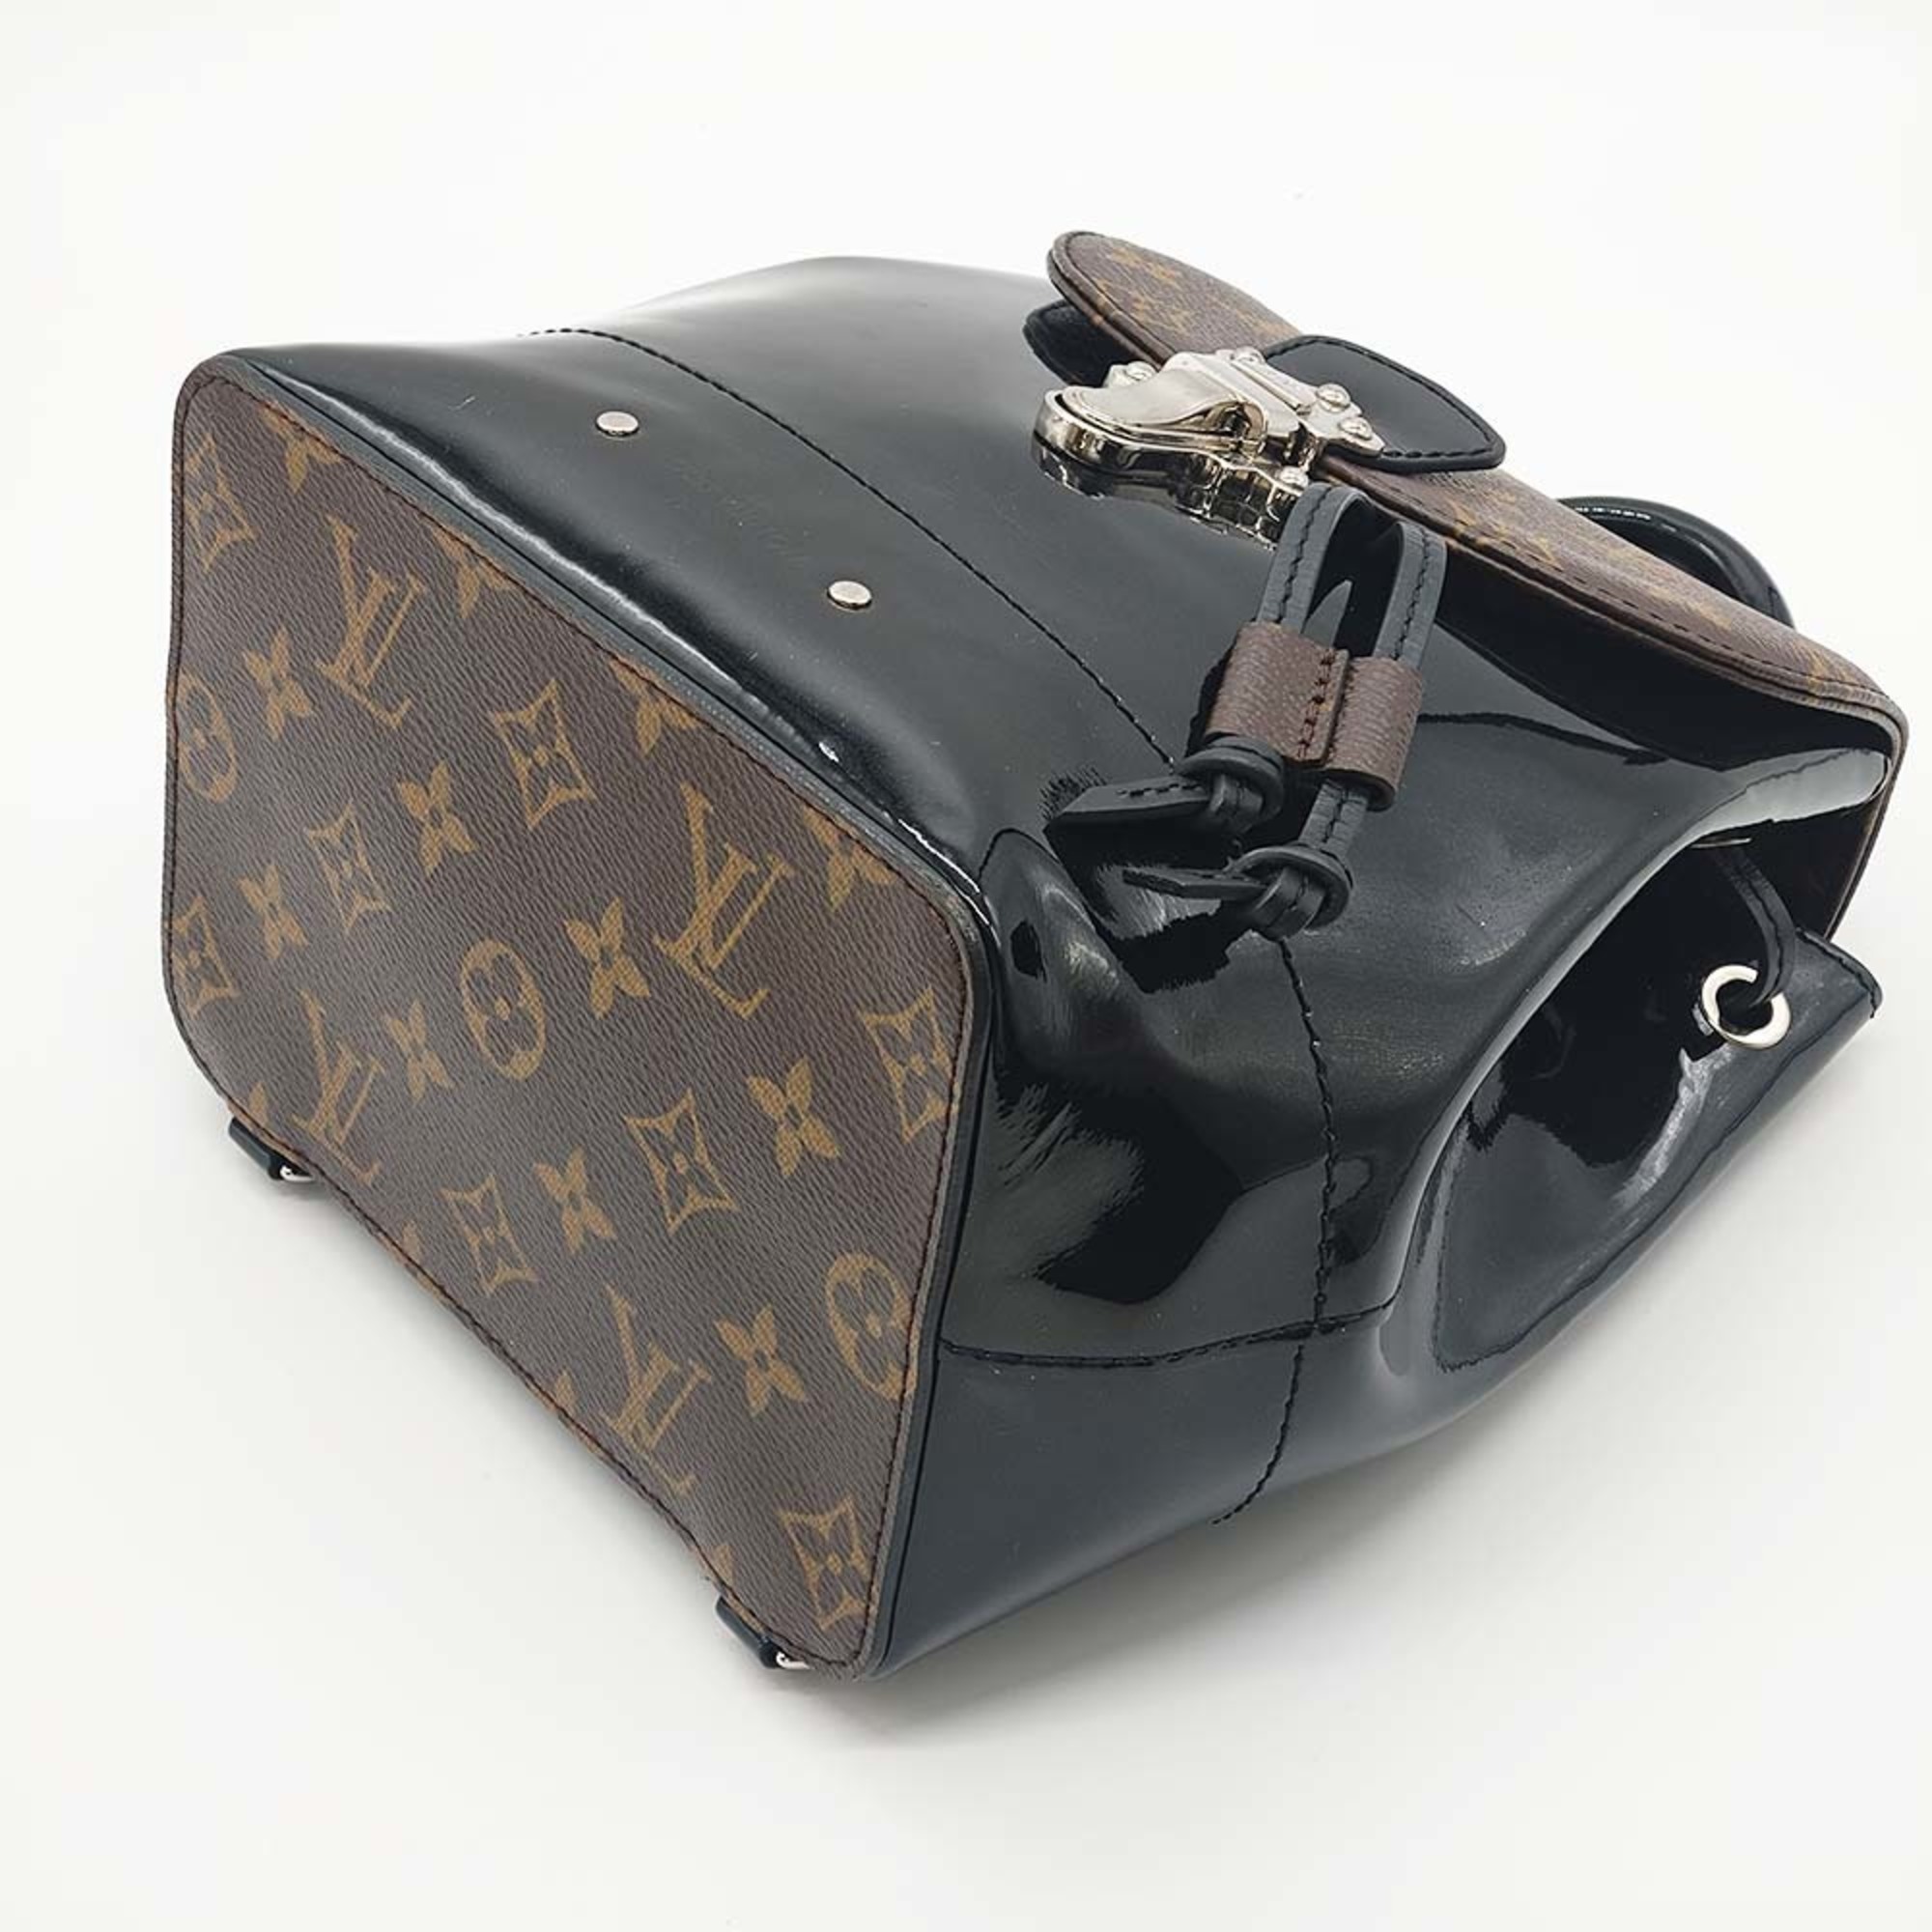 Louis Vuitton M55769 Hot Springs Backpack Handbag 2way Brown Vernis x Monogram LOUIS VUITTON